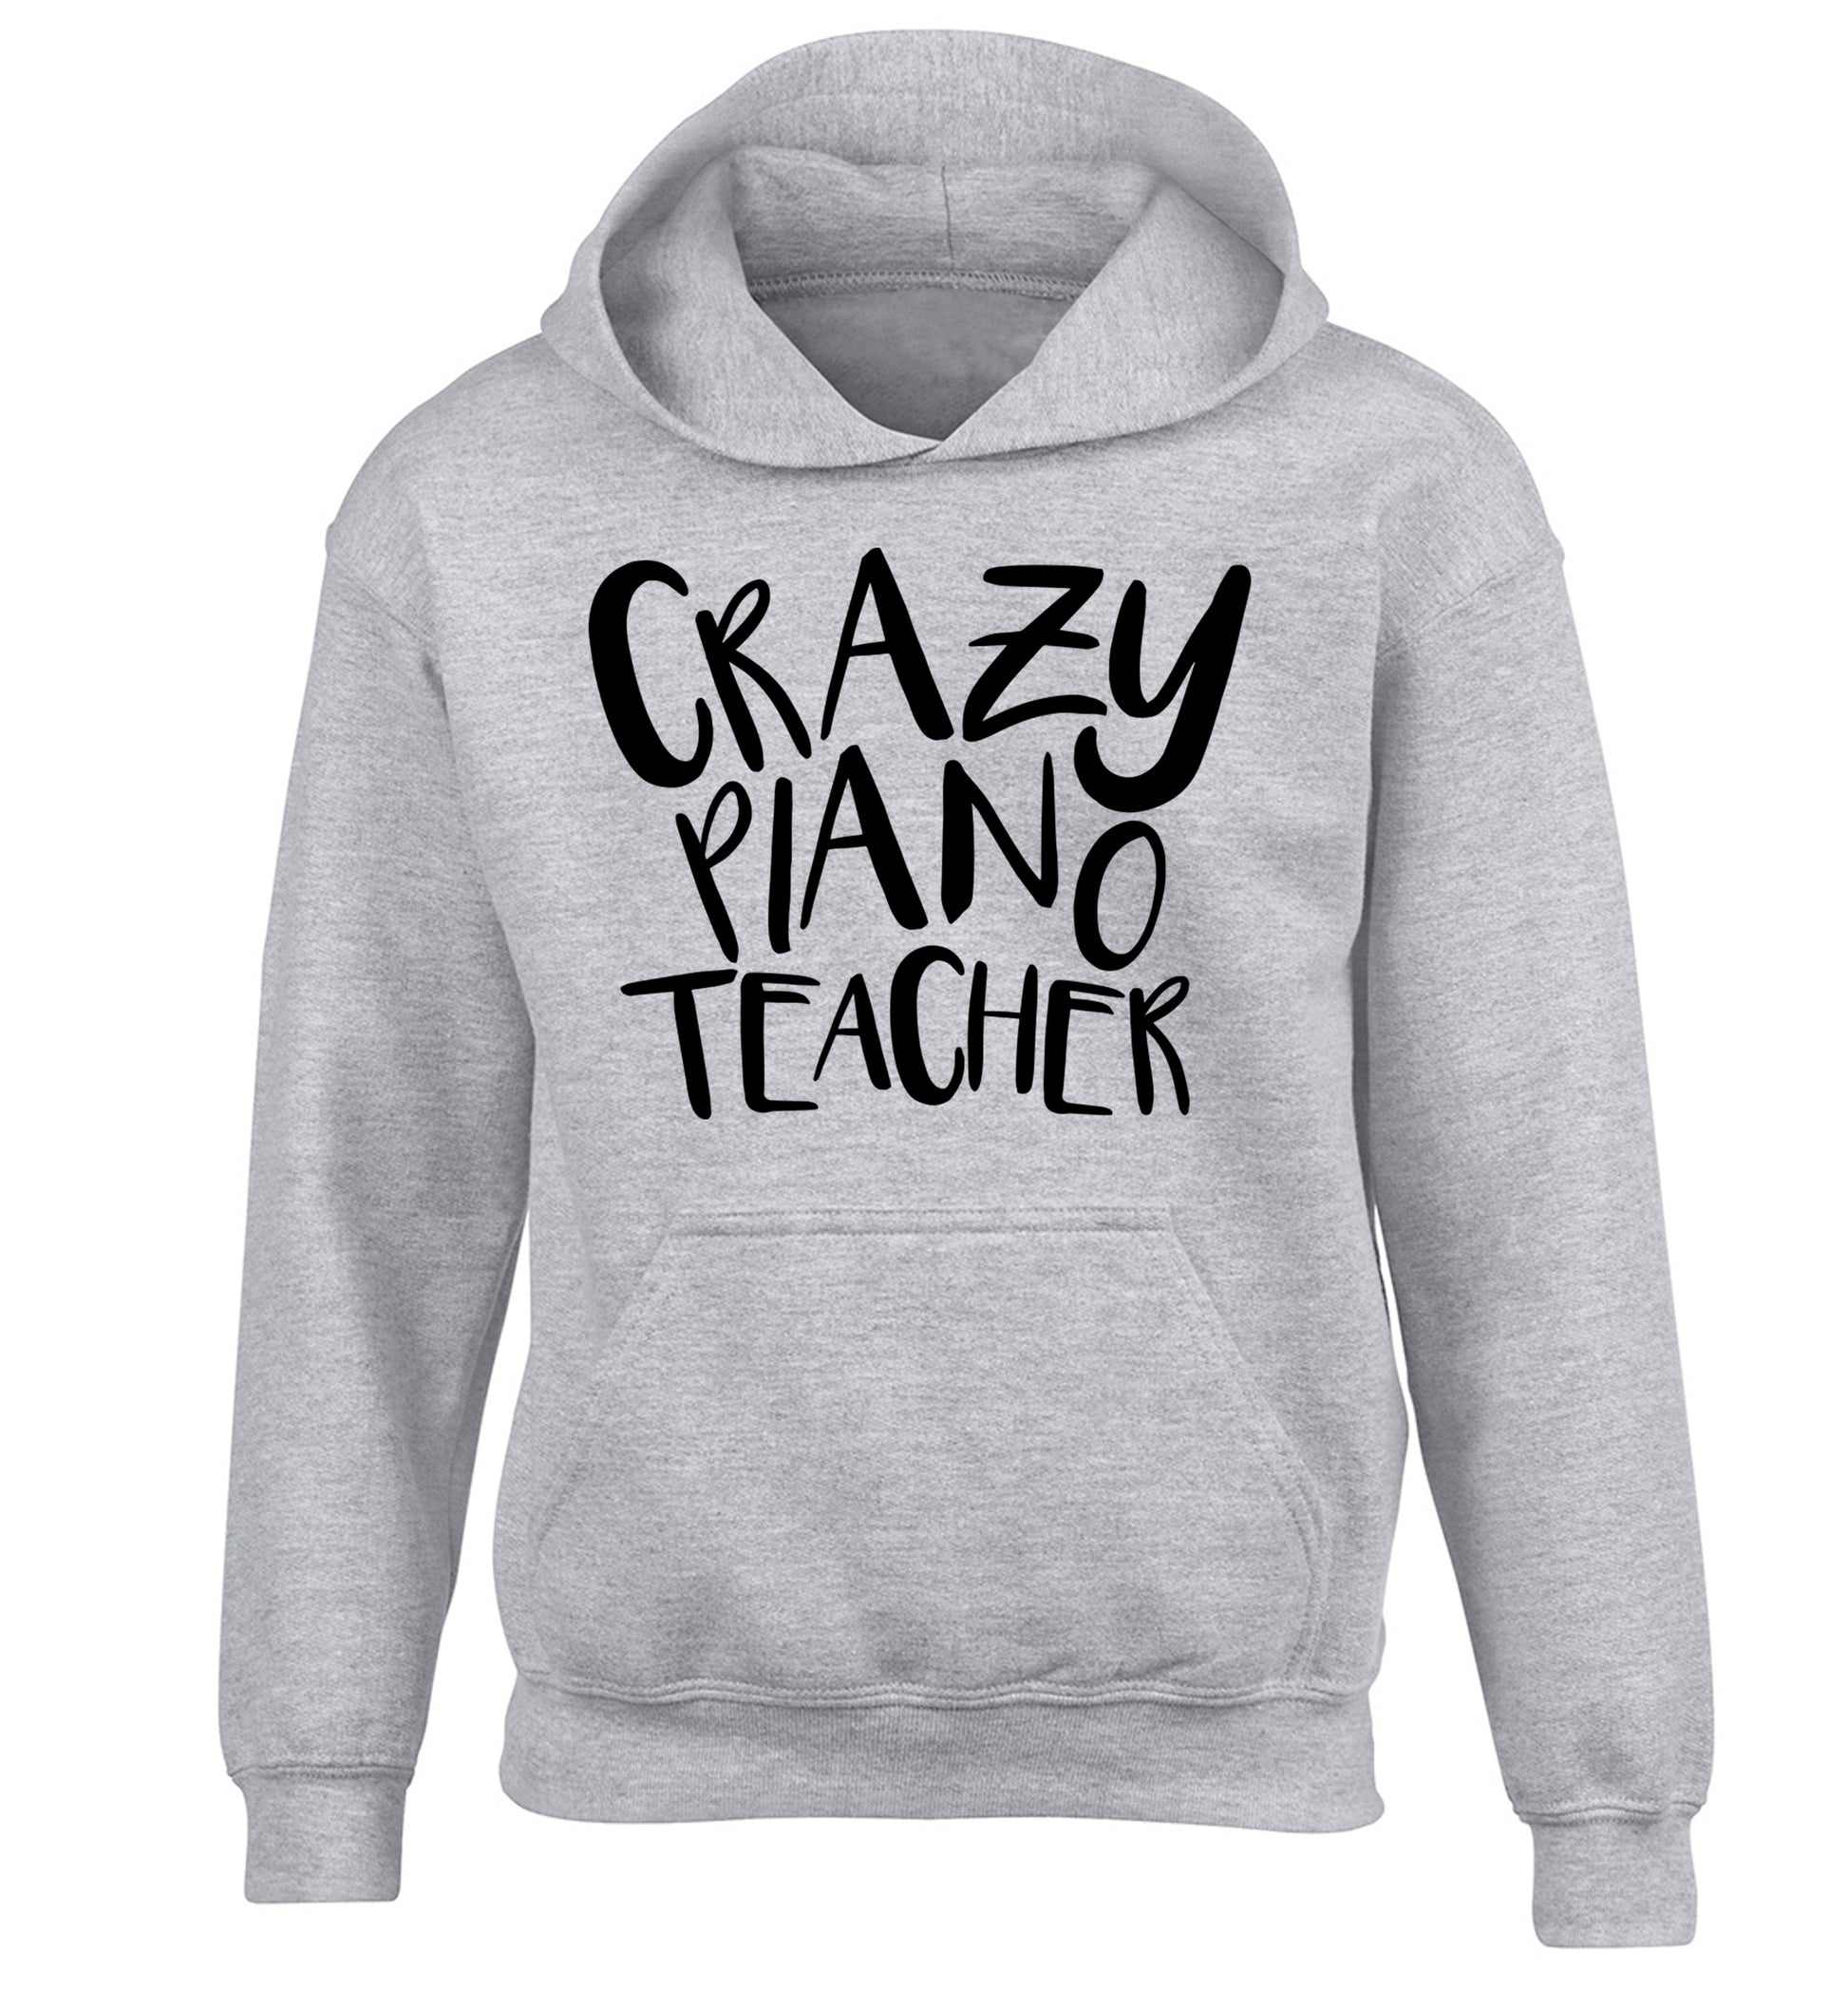 Crazy piano teacher children's grey hoodie 12-13 Years